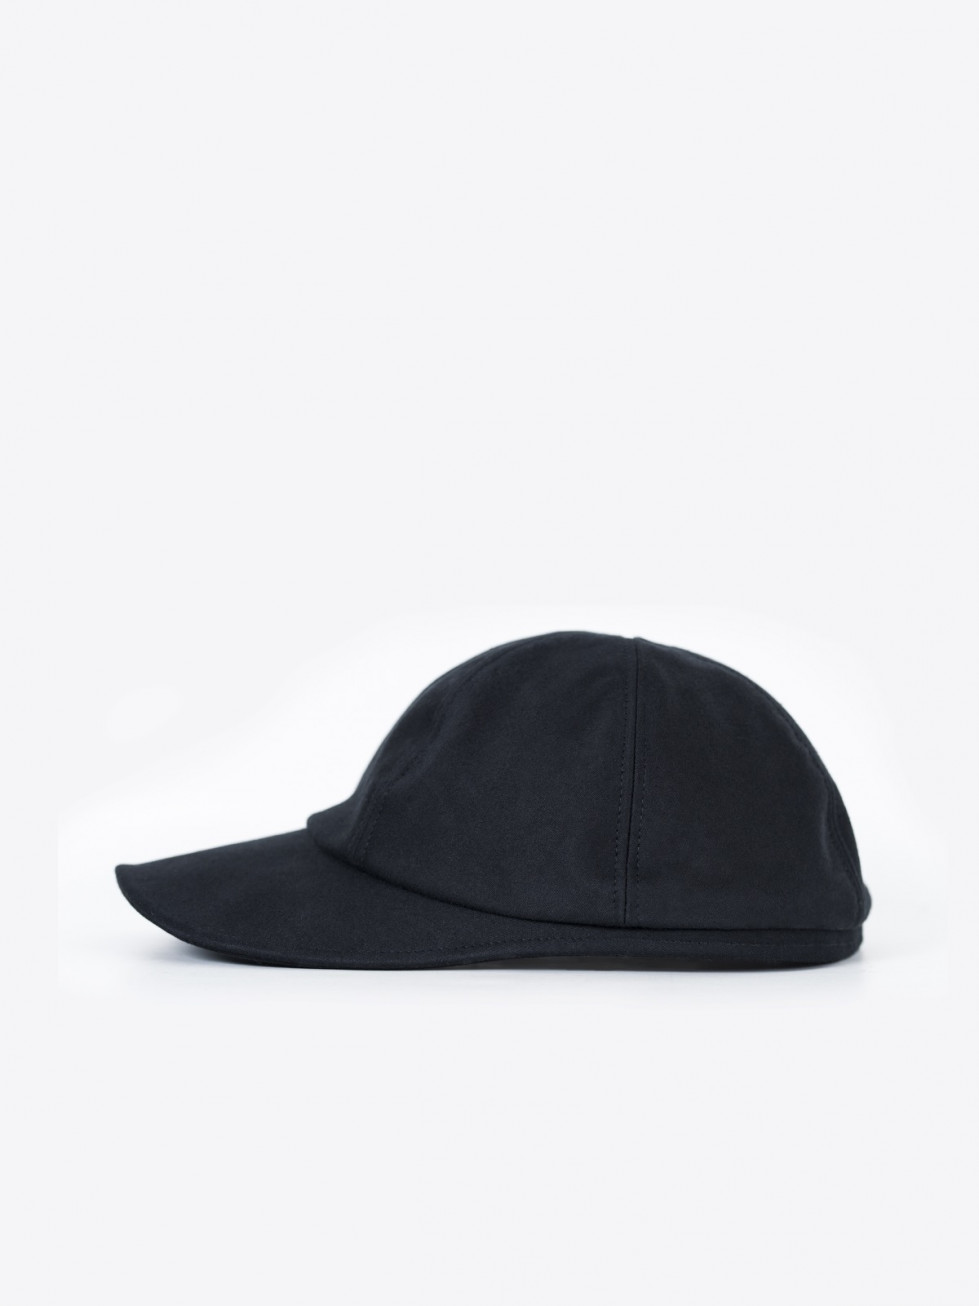 A2 - hat - 